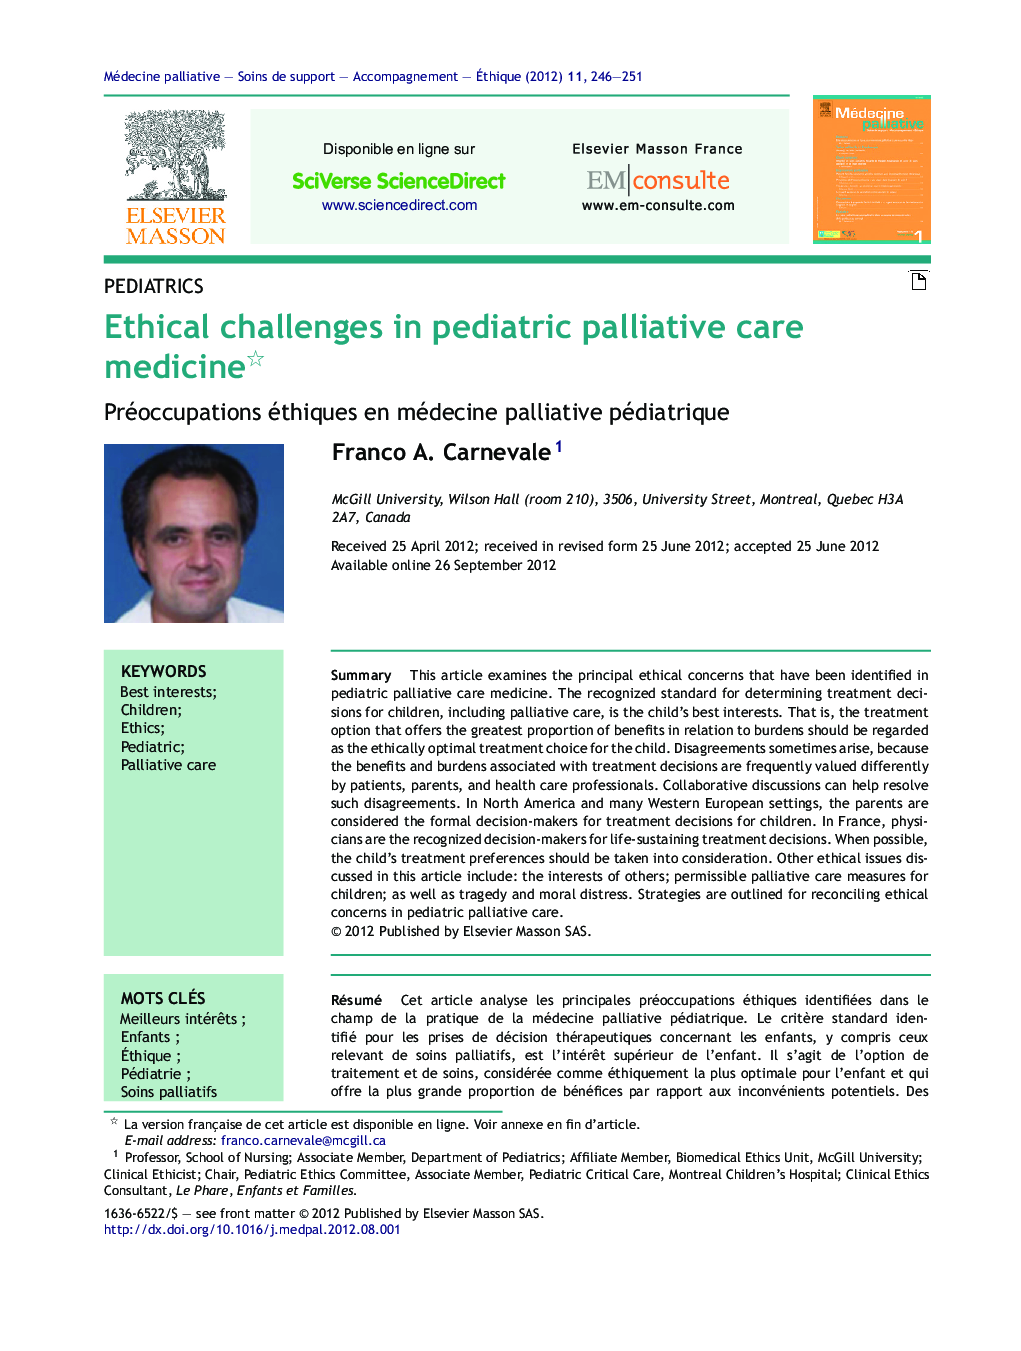 Ethical challenges in pediatric palliative care medicine